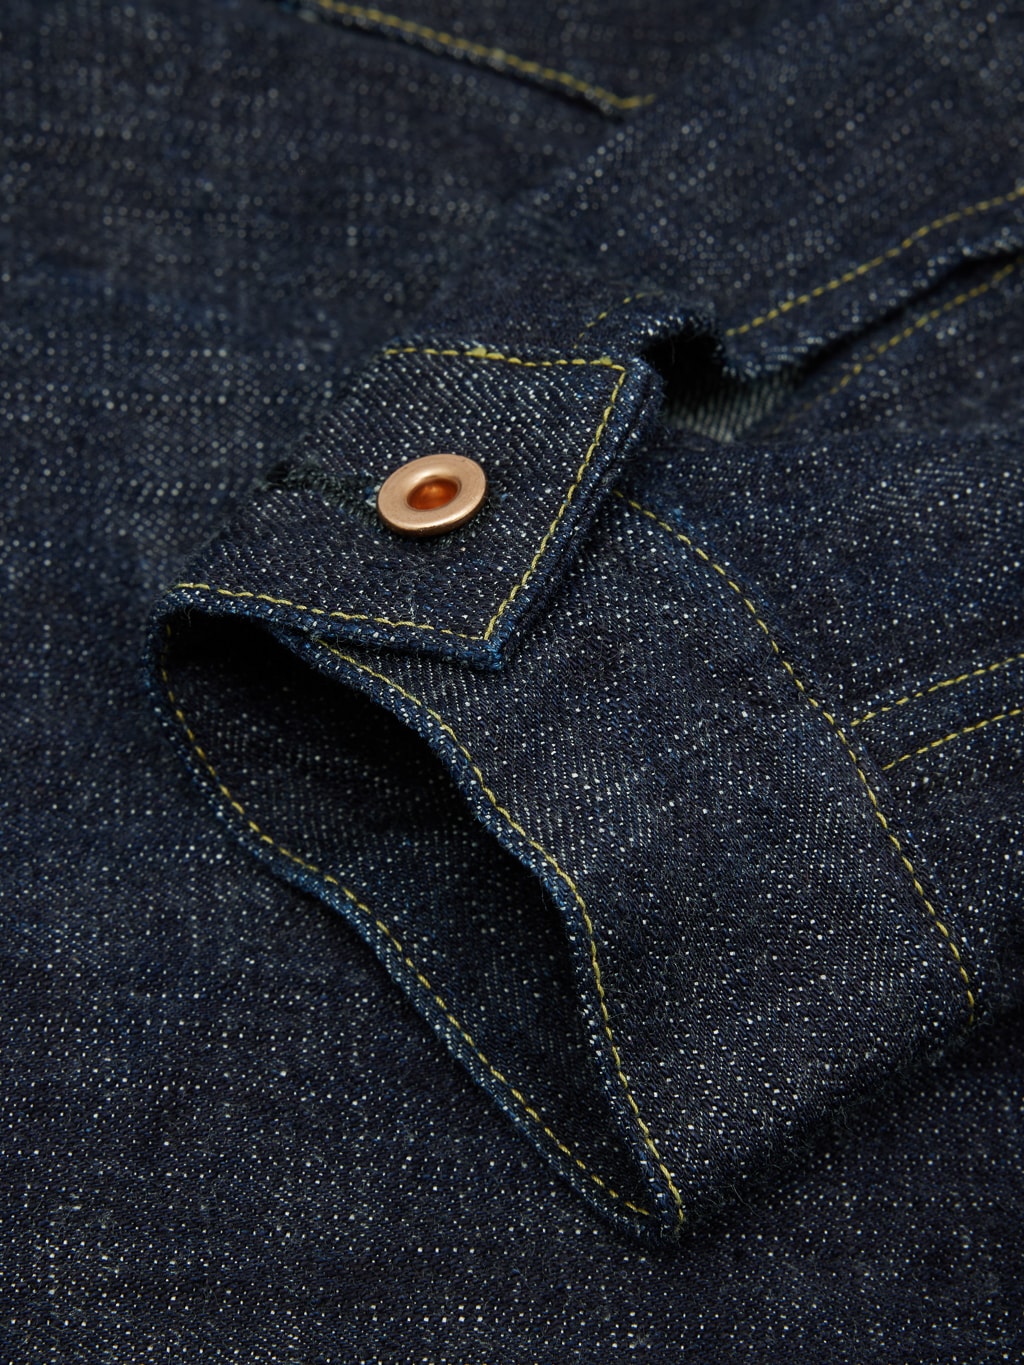 Fob factory denim pullover pocket shirt cuff detail